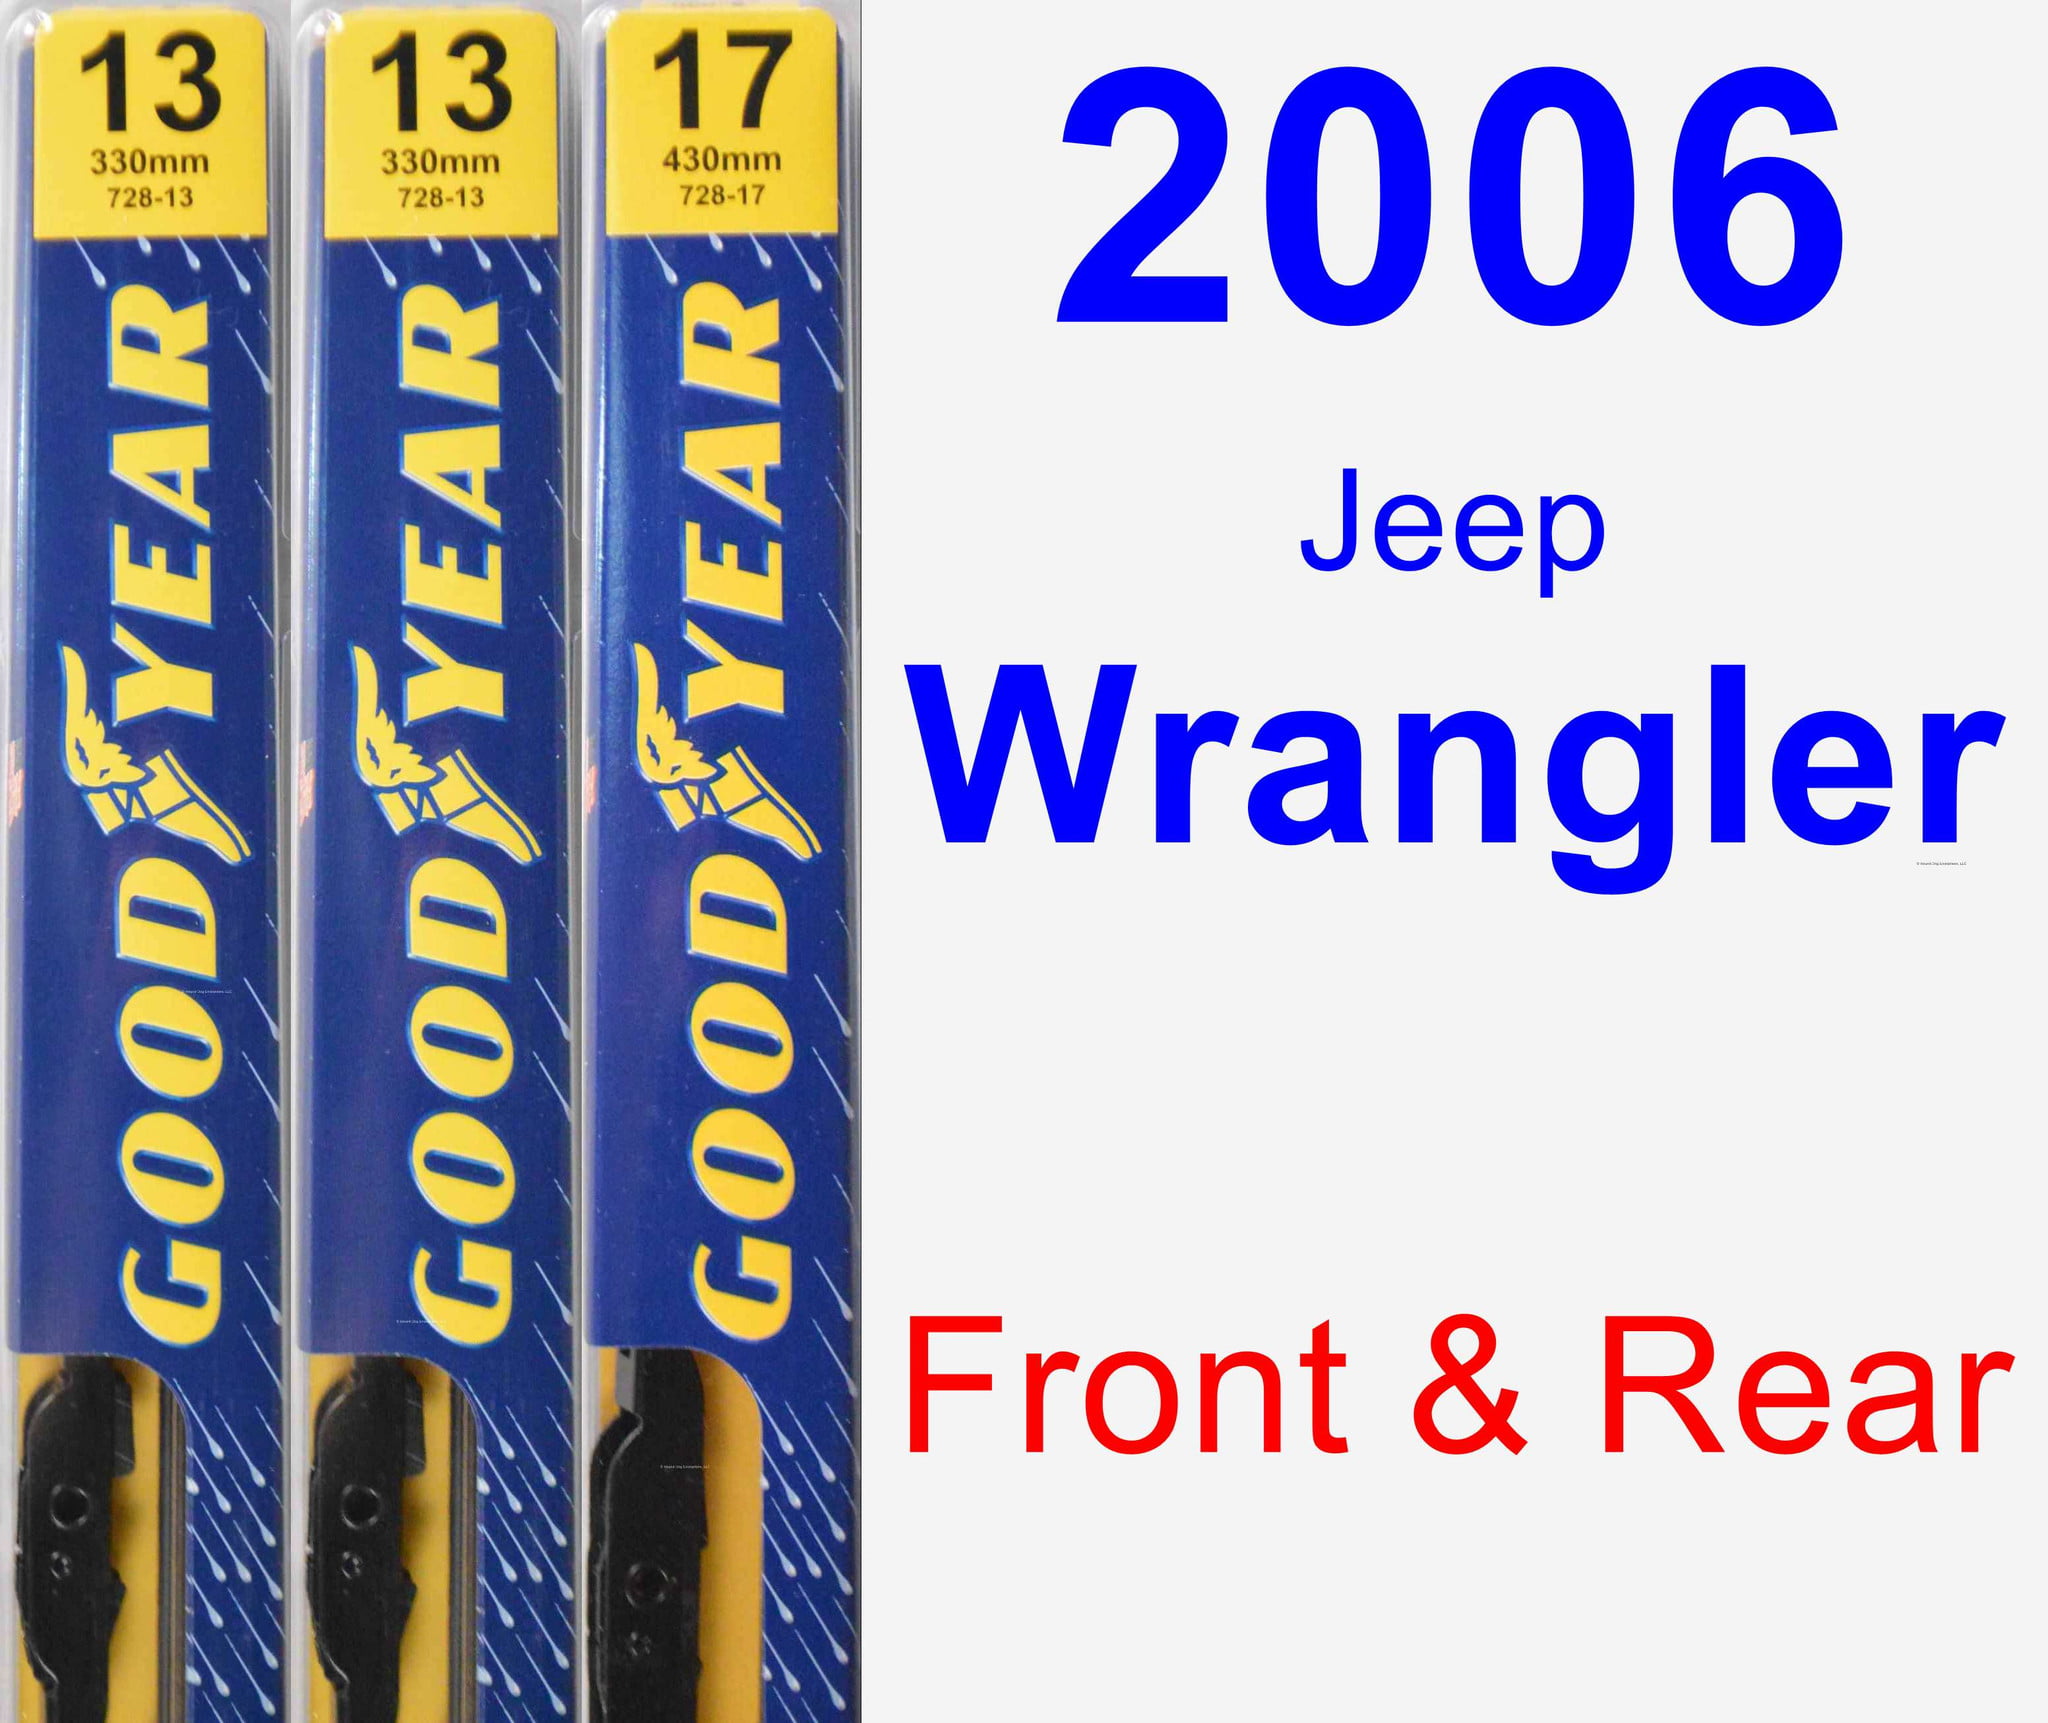 2006 Jeep Wrangler Wiper Blade Set/Kit (Front & Rear) (3 Blades) -  Premium 